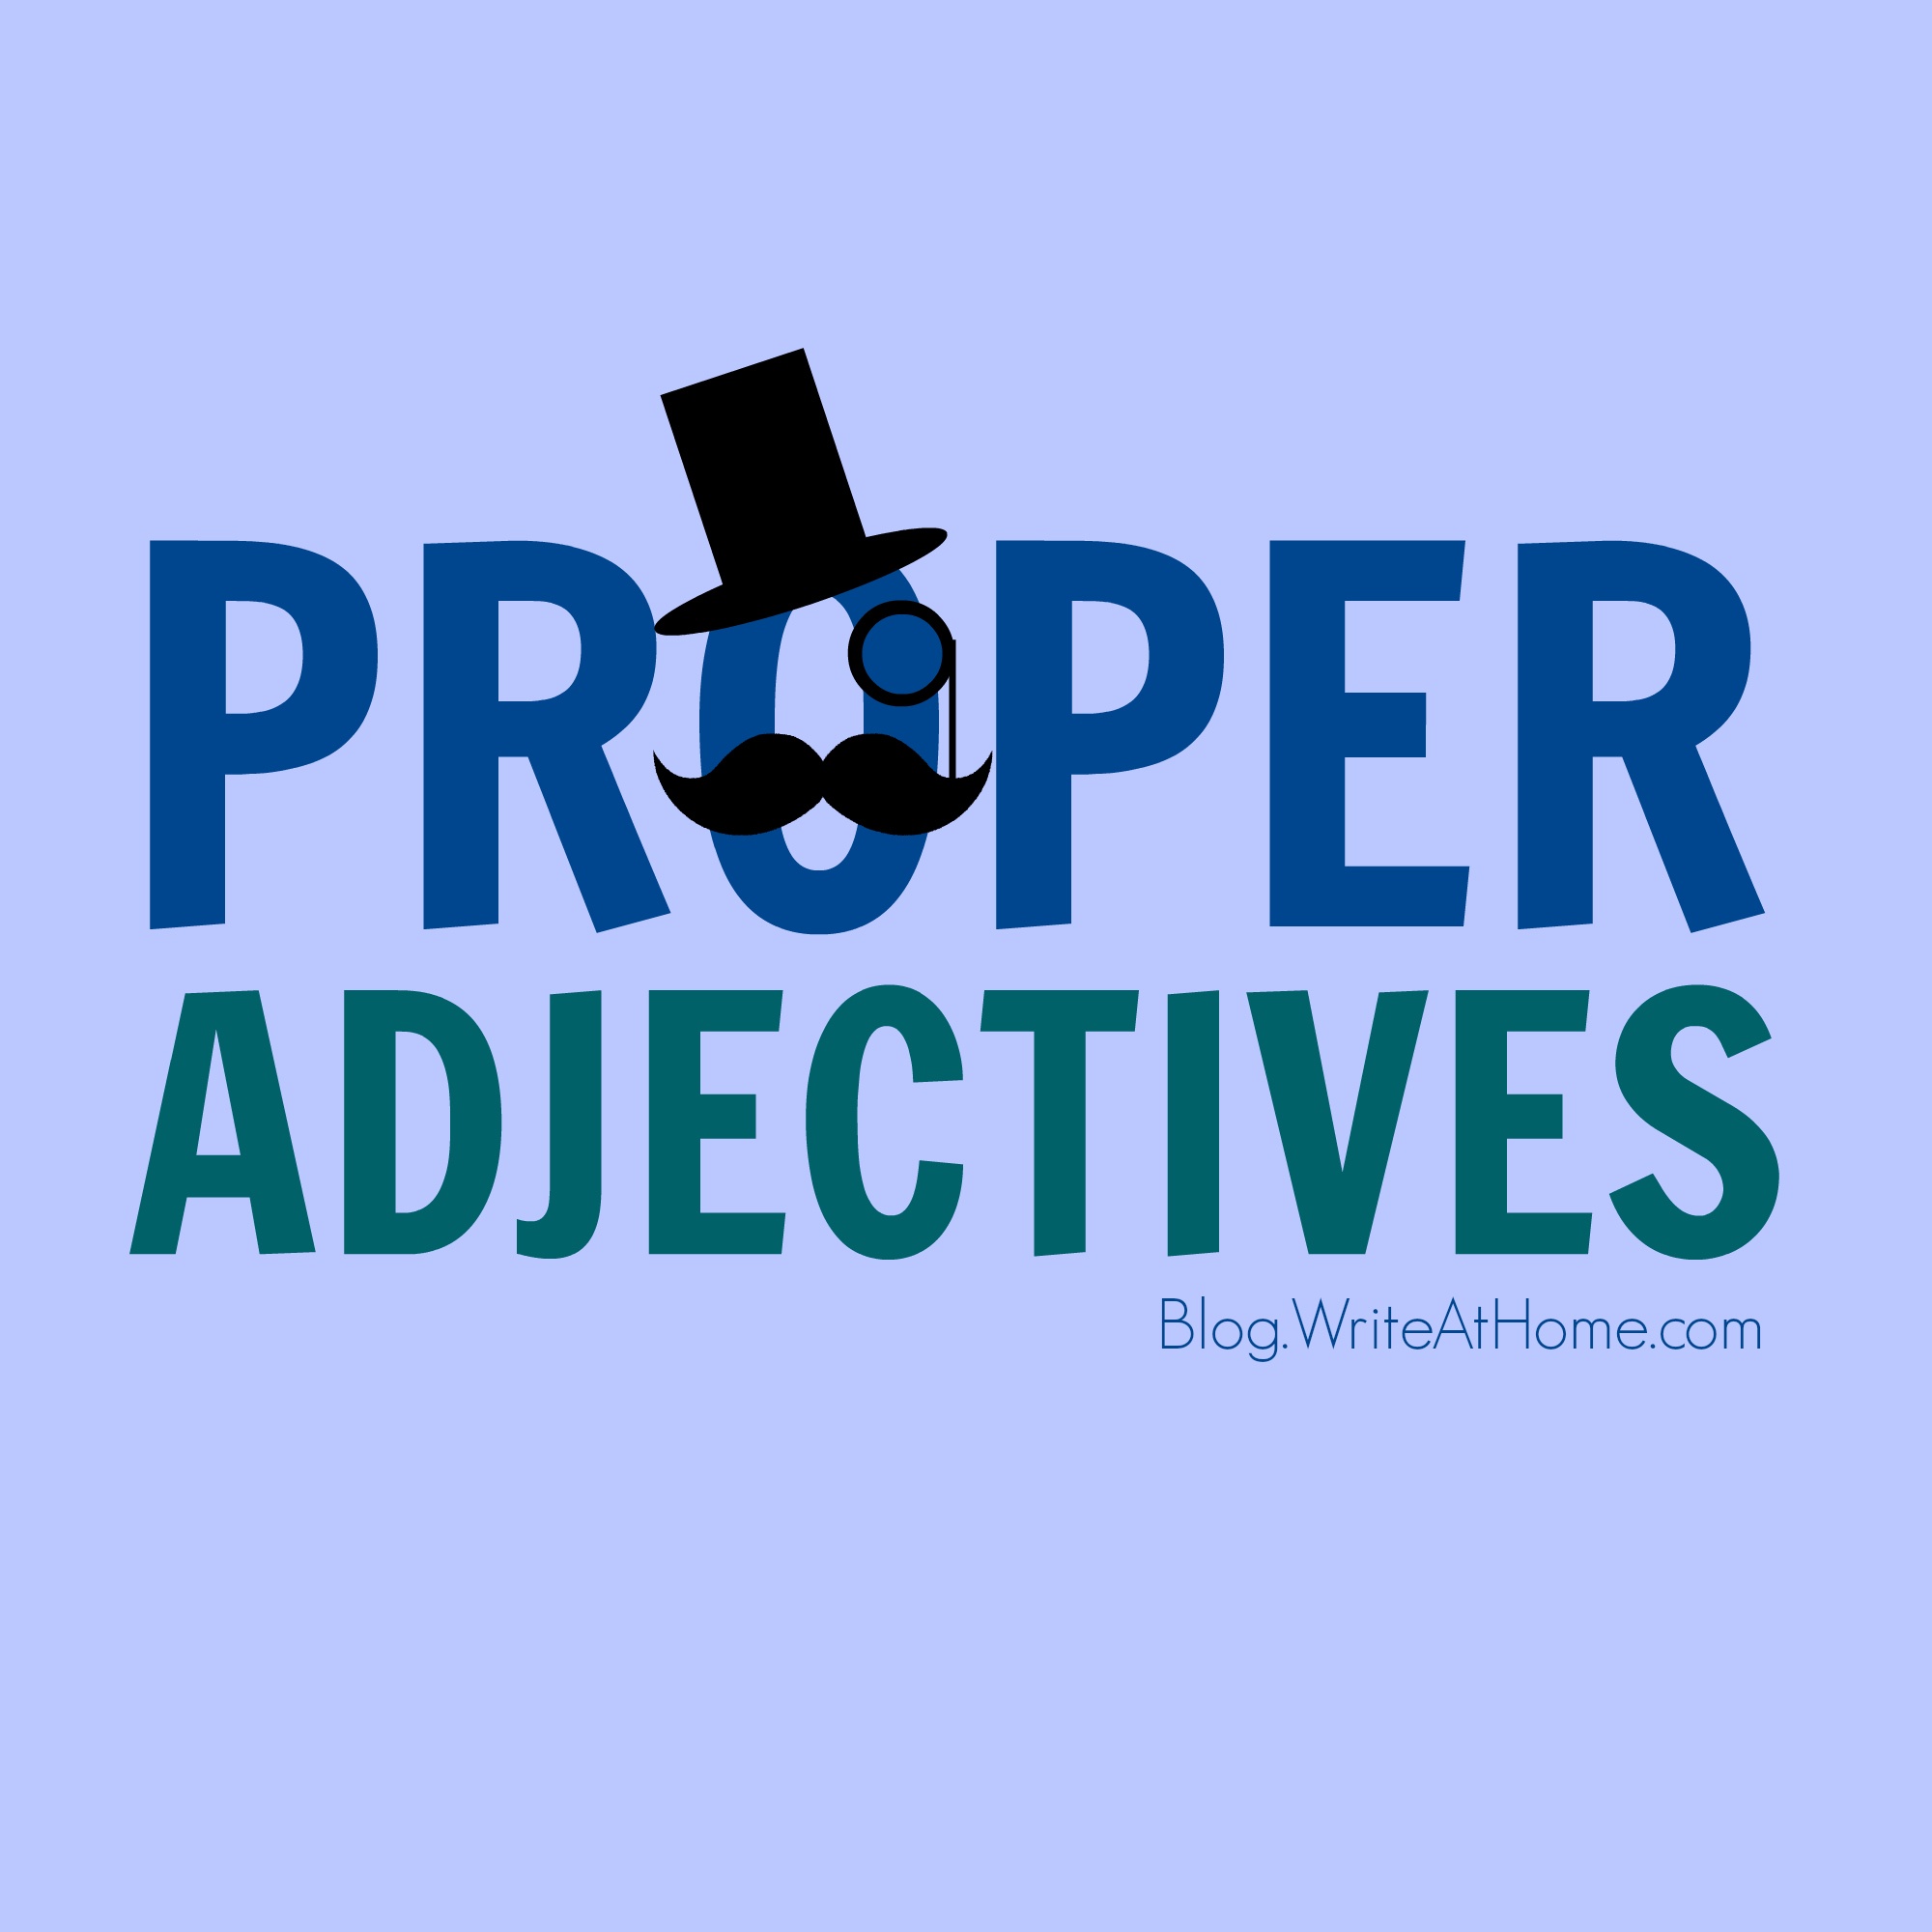 capitalizing-proper-nouns-and-proper-adjectives-639-plays-quizizz